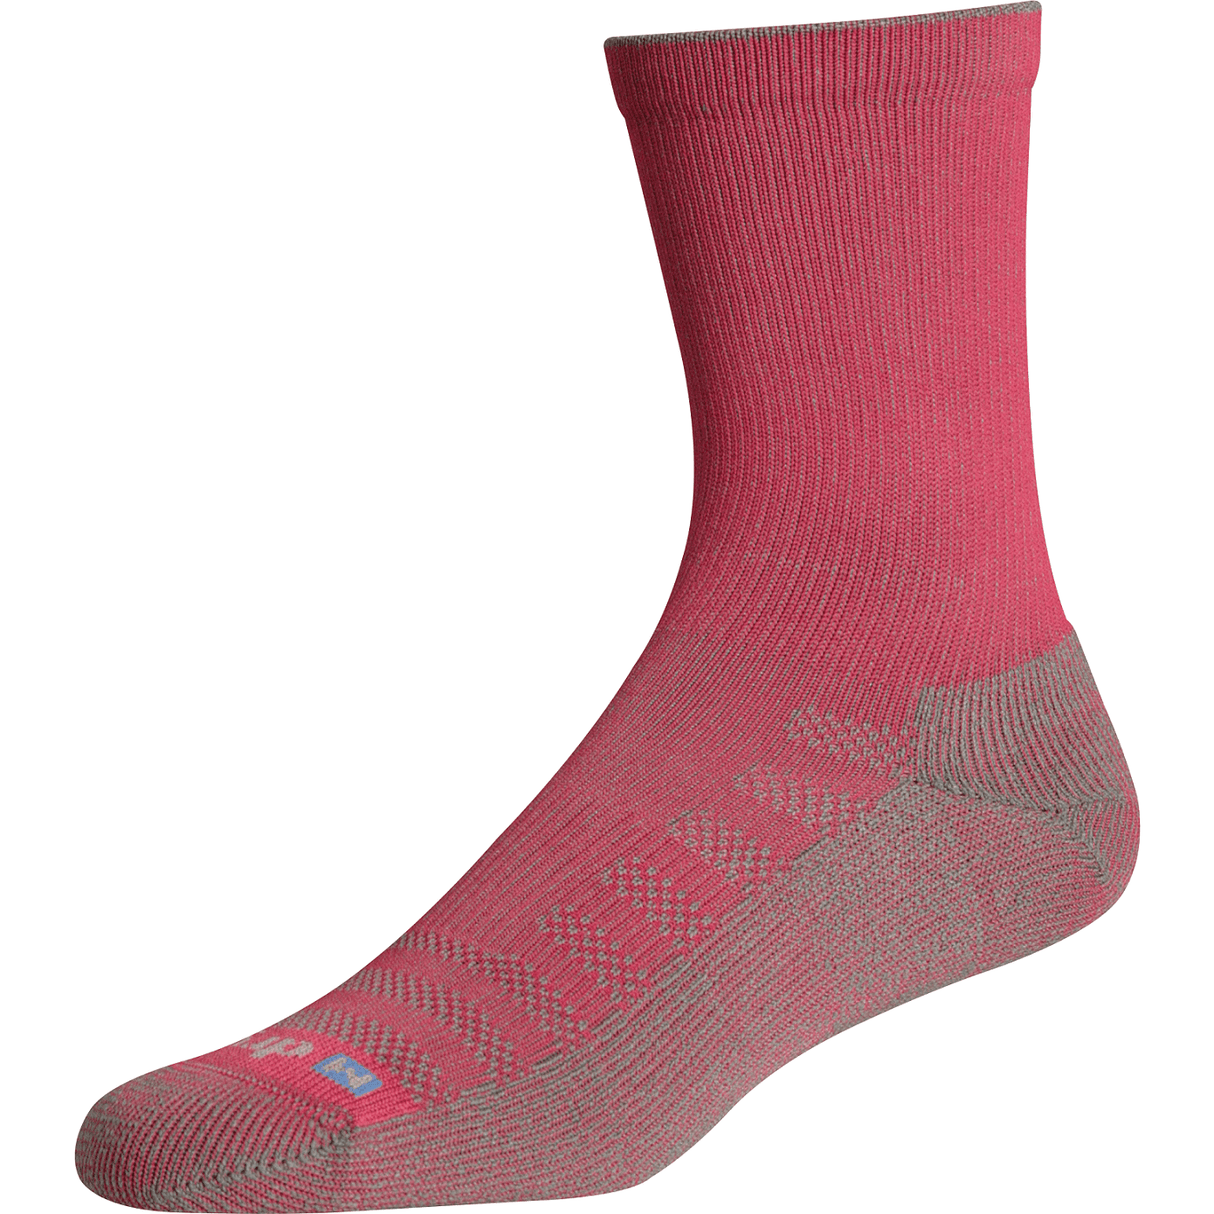 Drymax Lite Hiking Crew Socks  -  Small / Pink/Anthracite